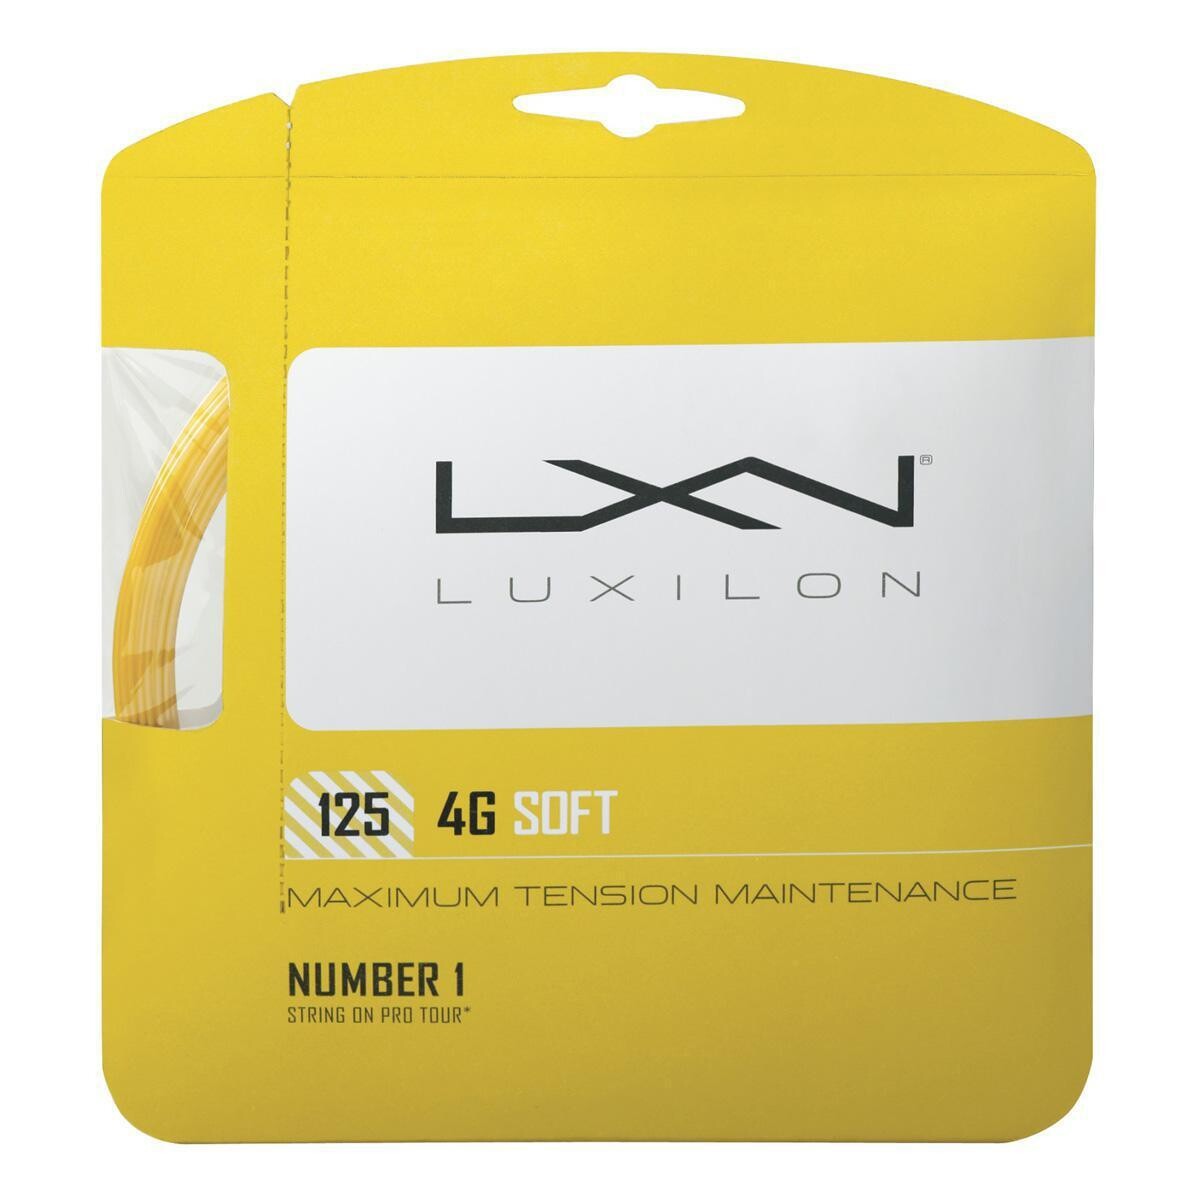 Luxilon 4G Soft 125 Tennis String Set - Gold